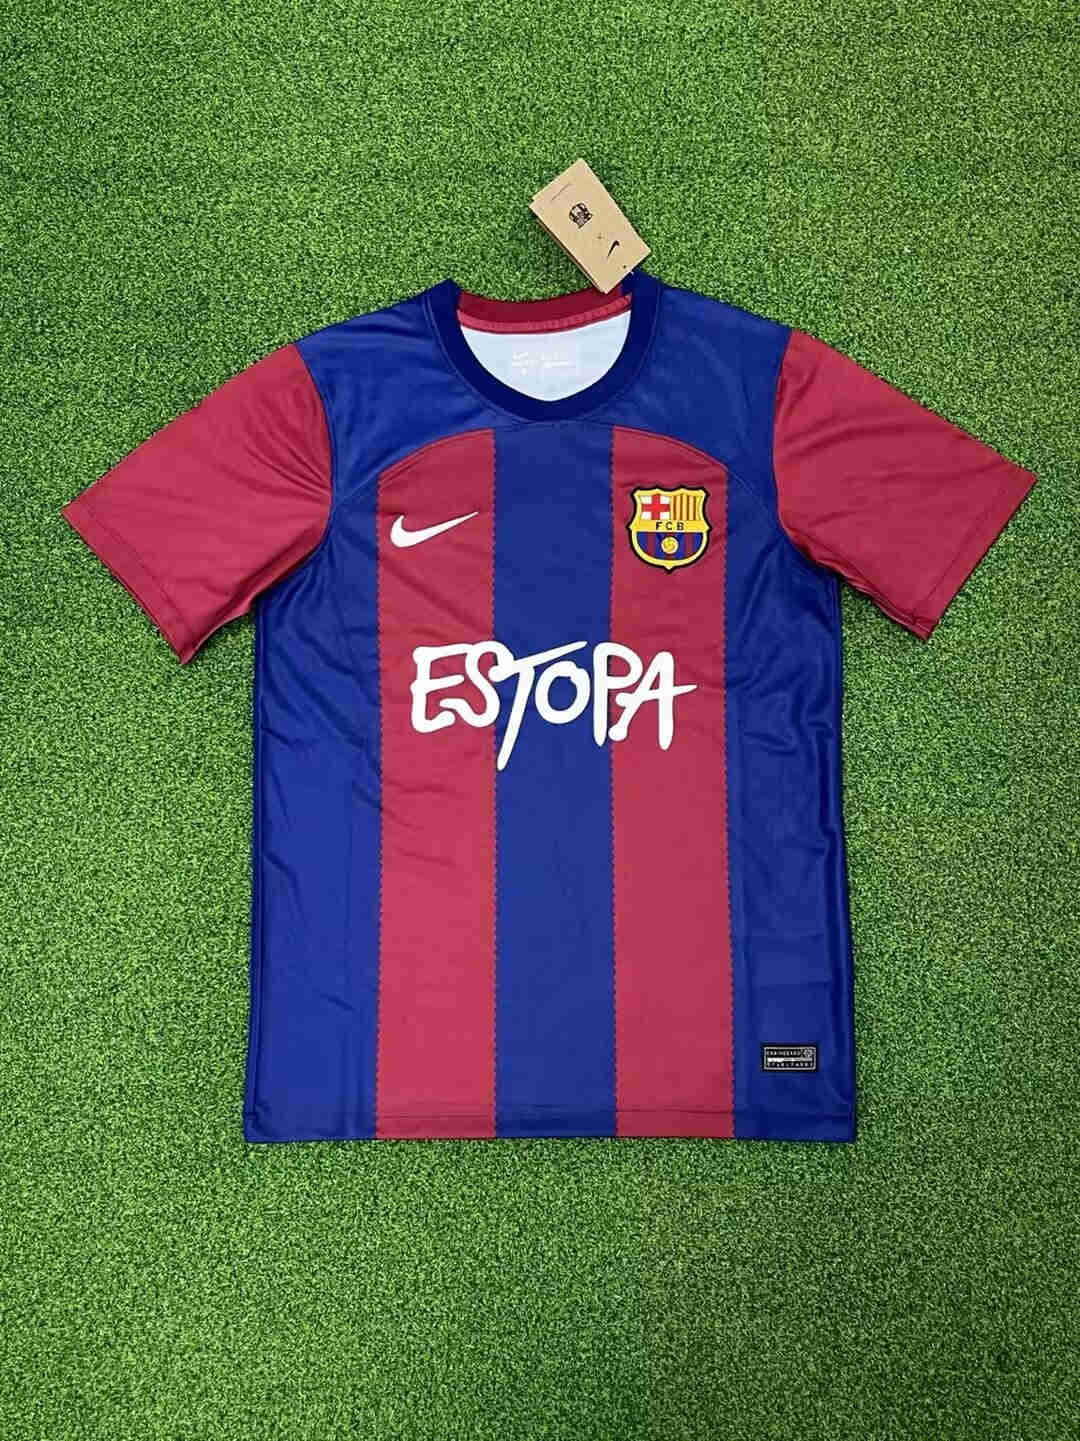 FC Barcelona English version soccer jersey